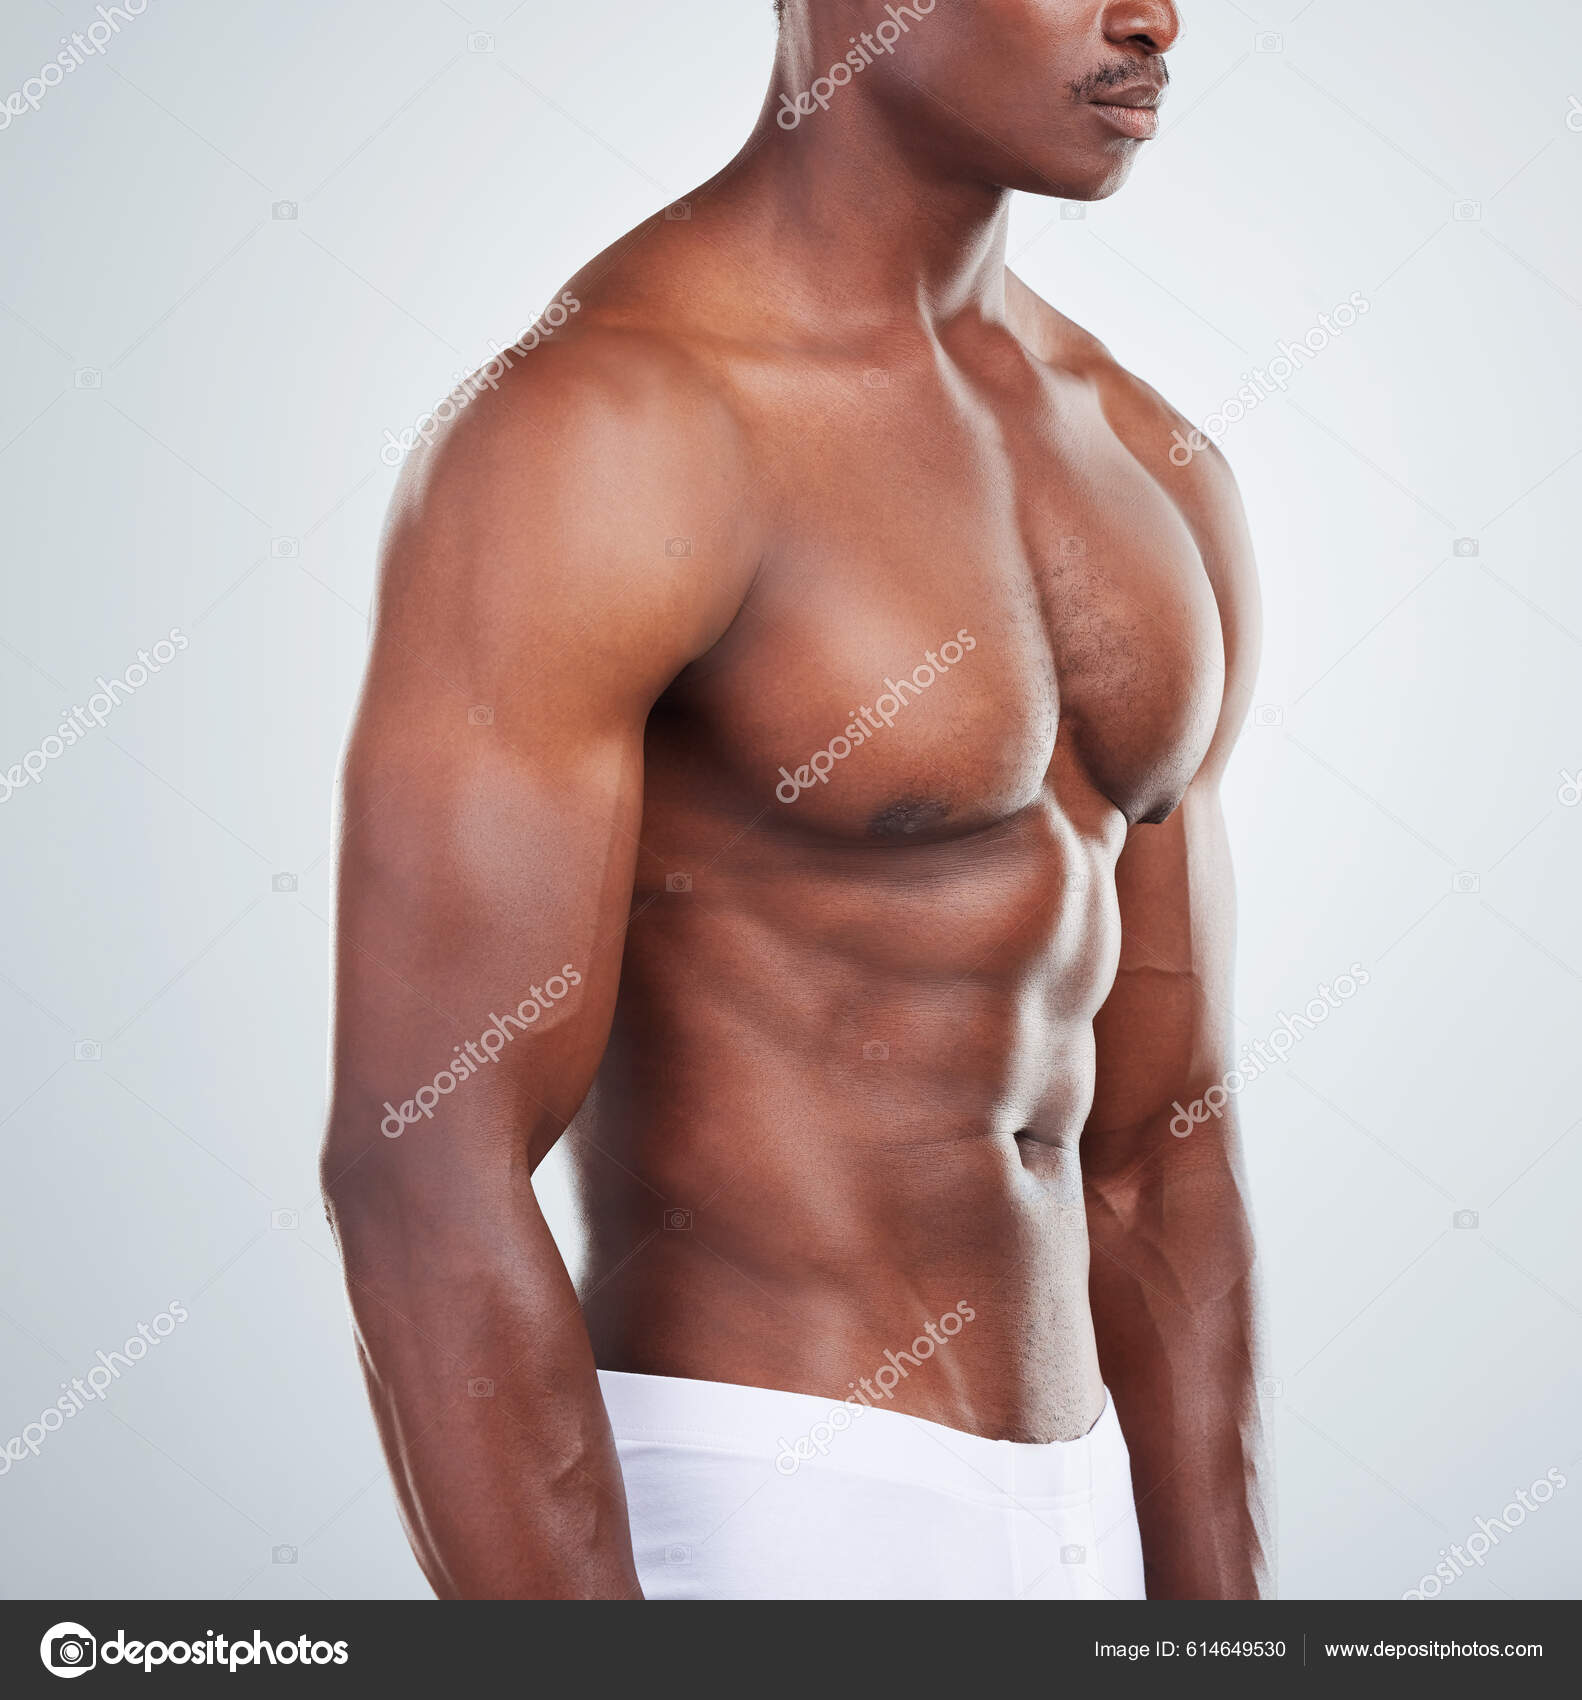 https://st.depositphotos.com/62628780/61464/i/1600/depositphotos_614649530-stock-photo-closeup-one-african-american-fitness.jpg